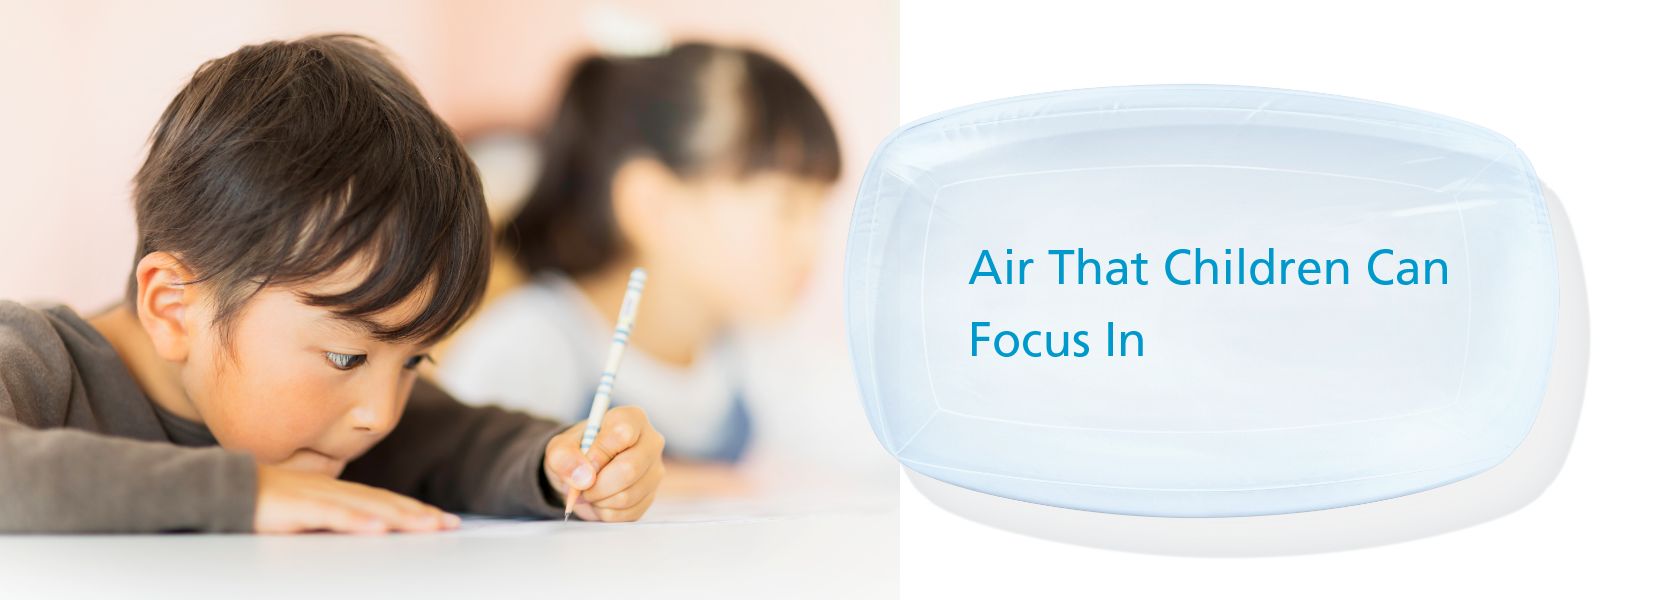 Air That Children Can Focus In